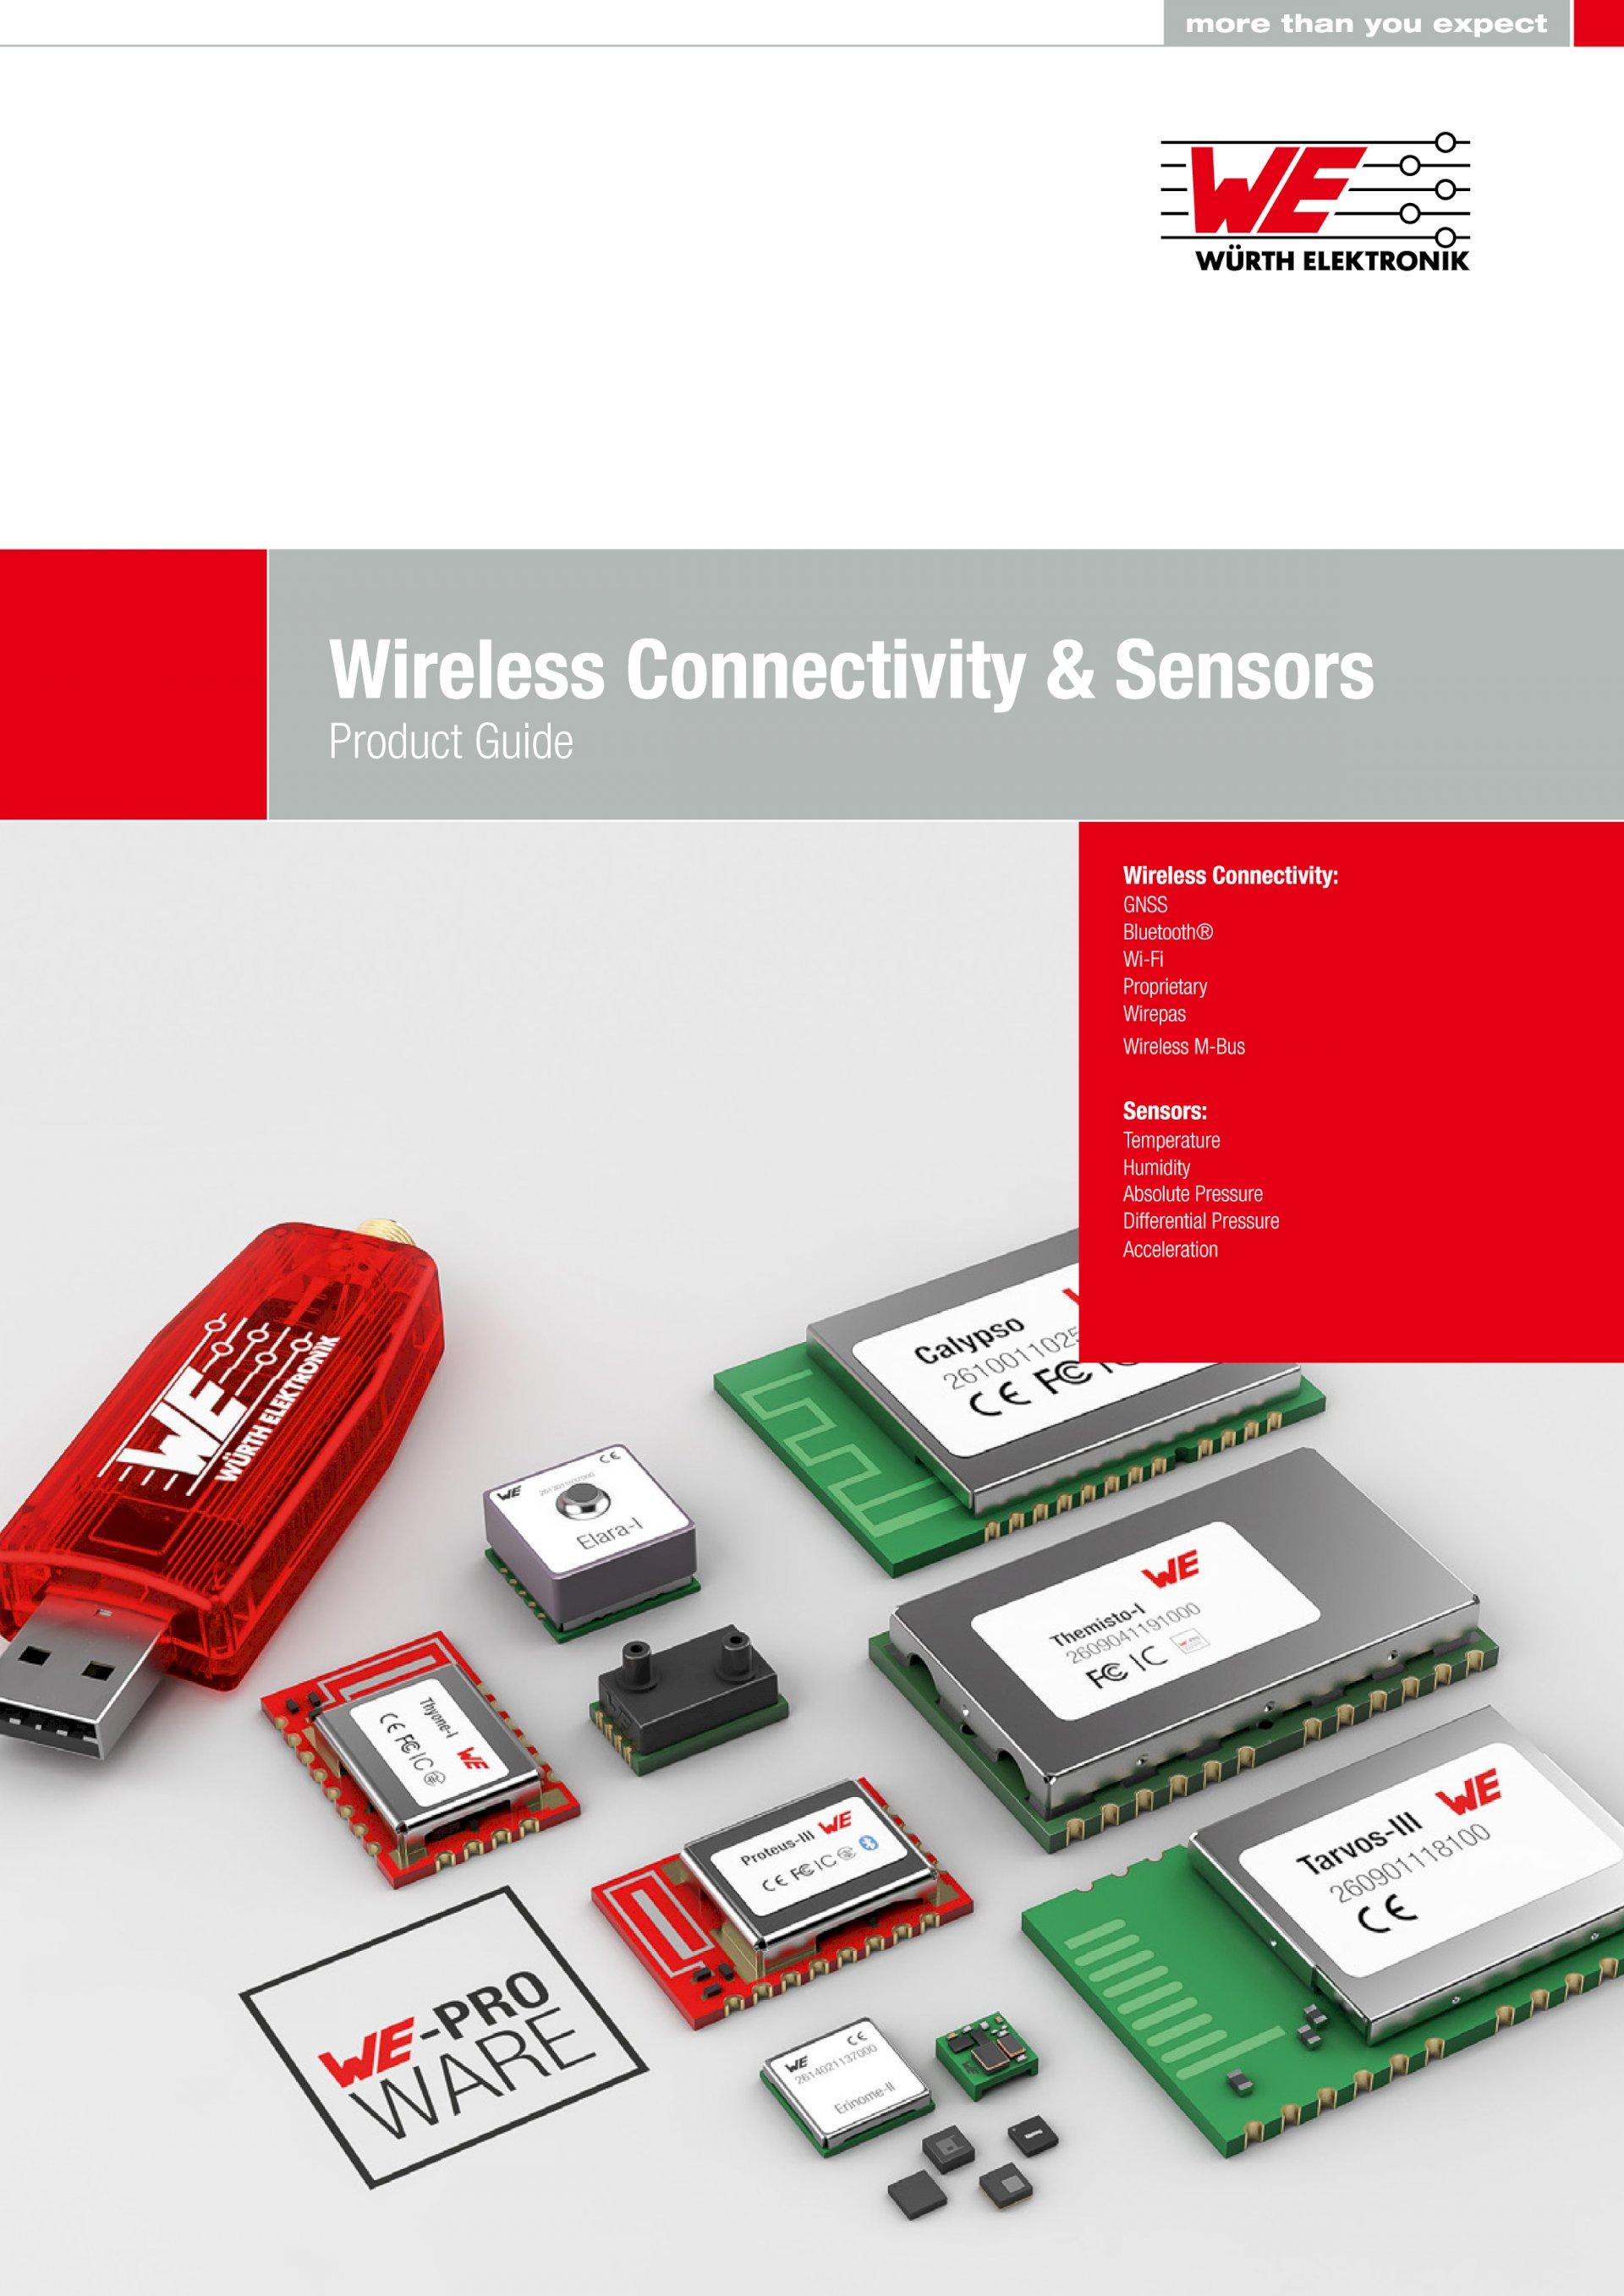 Würth Elektronik presents its Wireless Connectivity & Sensors Product Guide